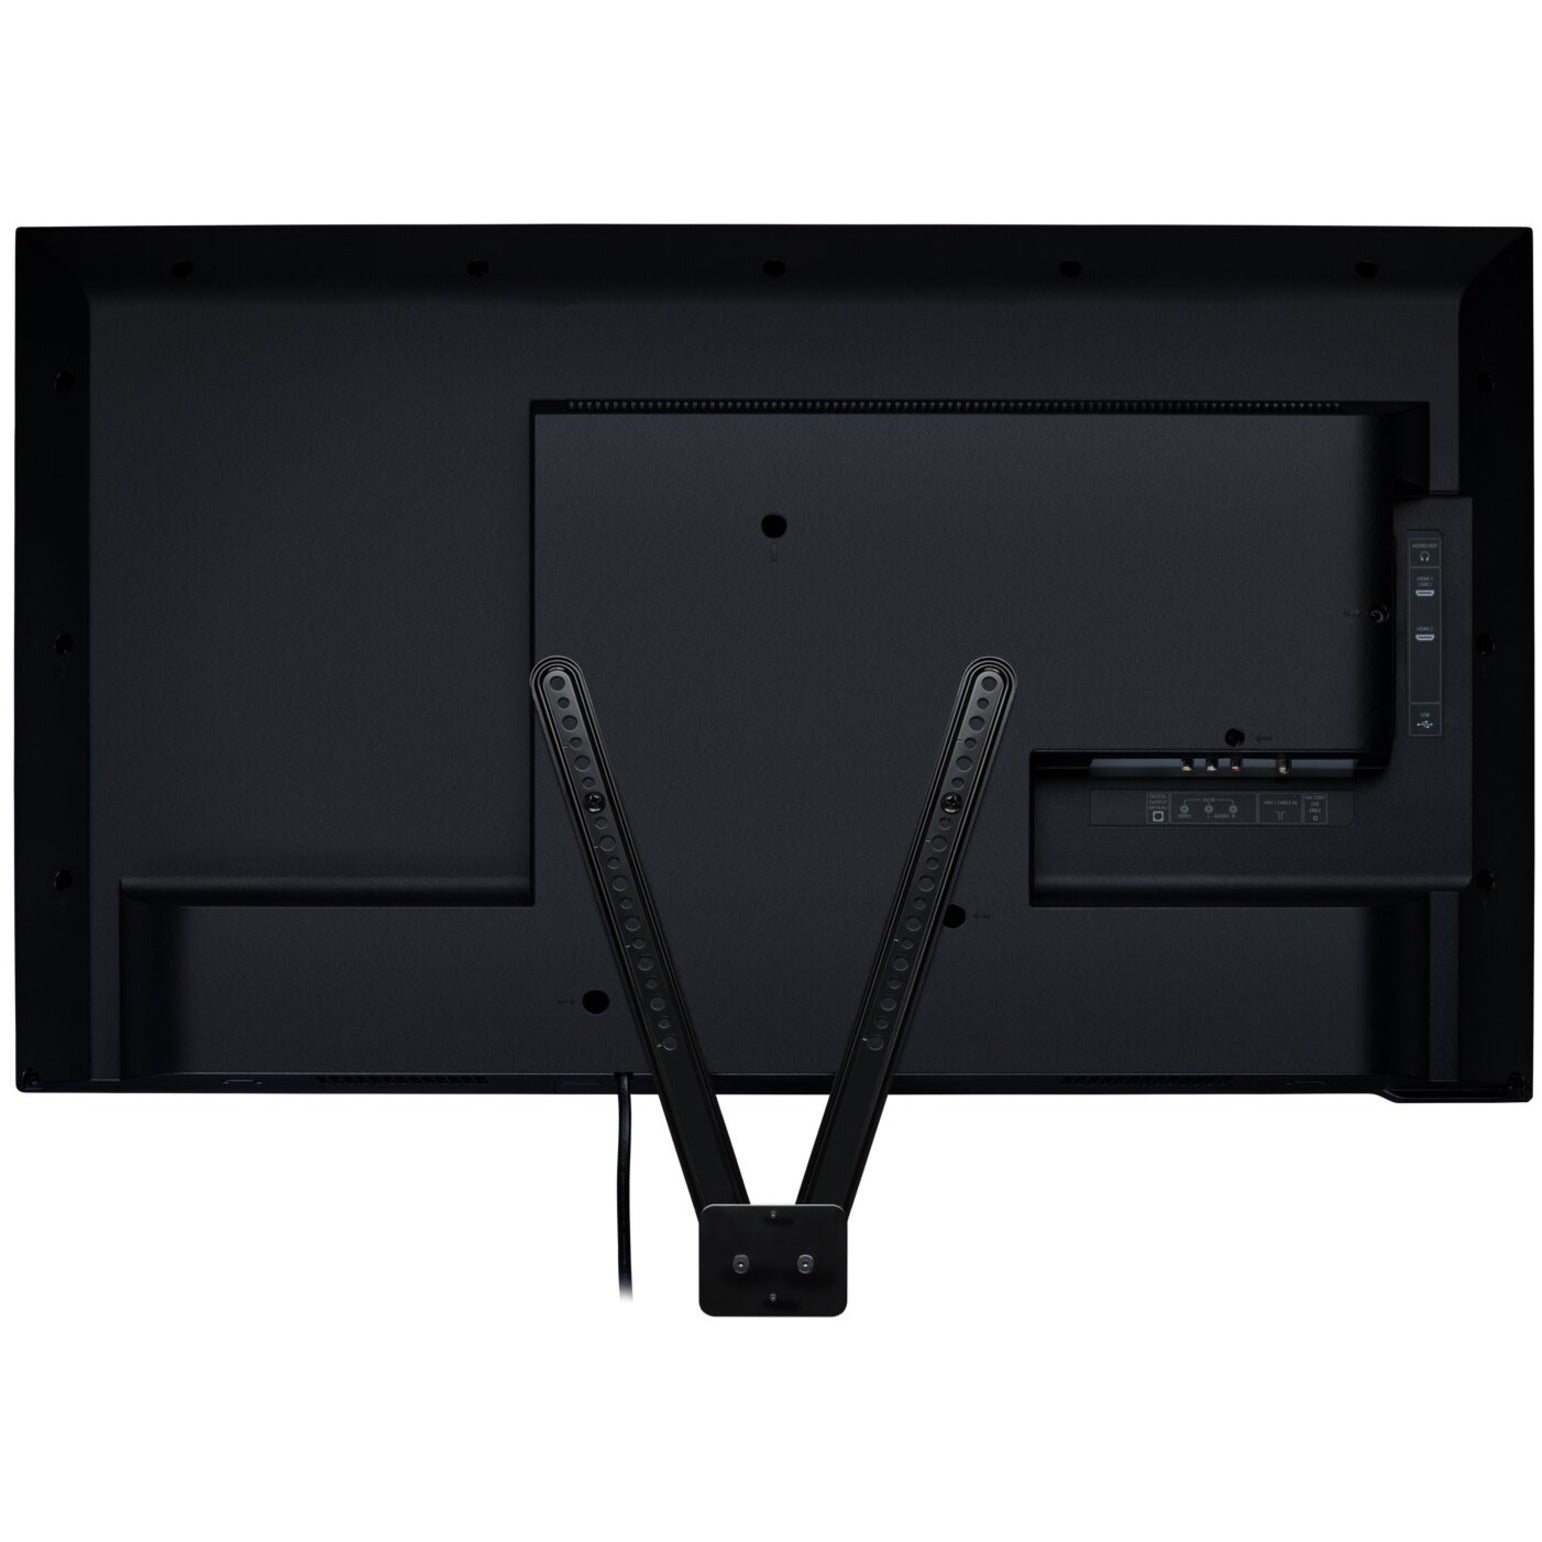 Logitech 939-001498 TV Mount for MeetUp, Swing-up Design, Black